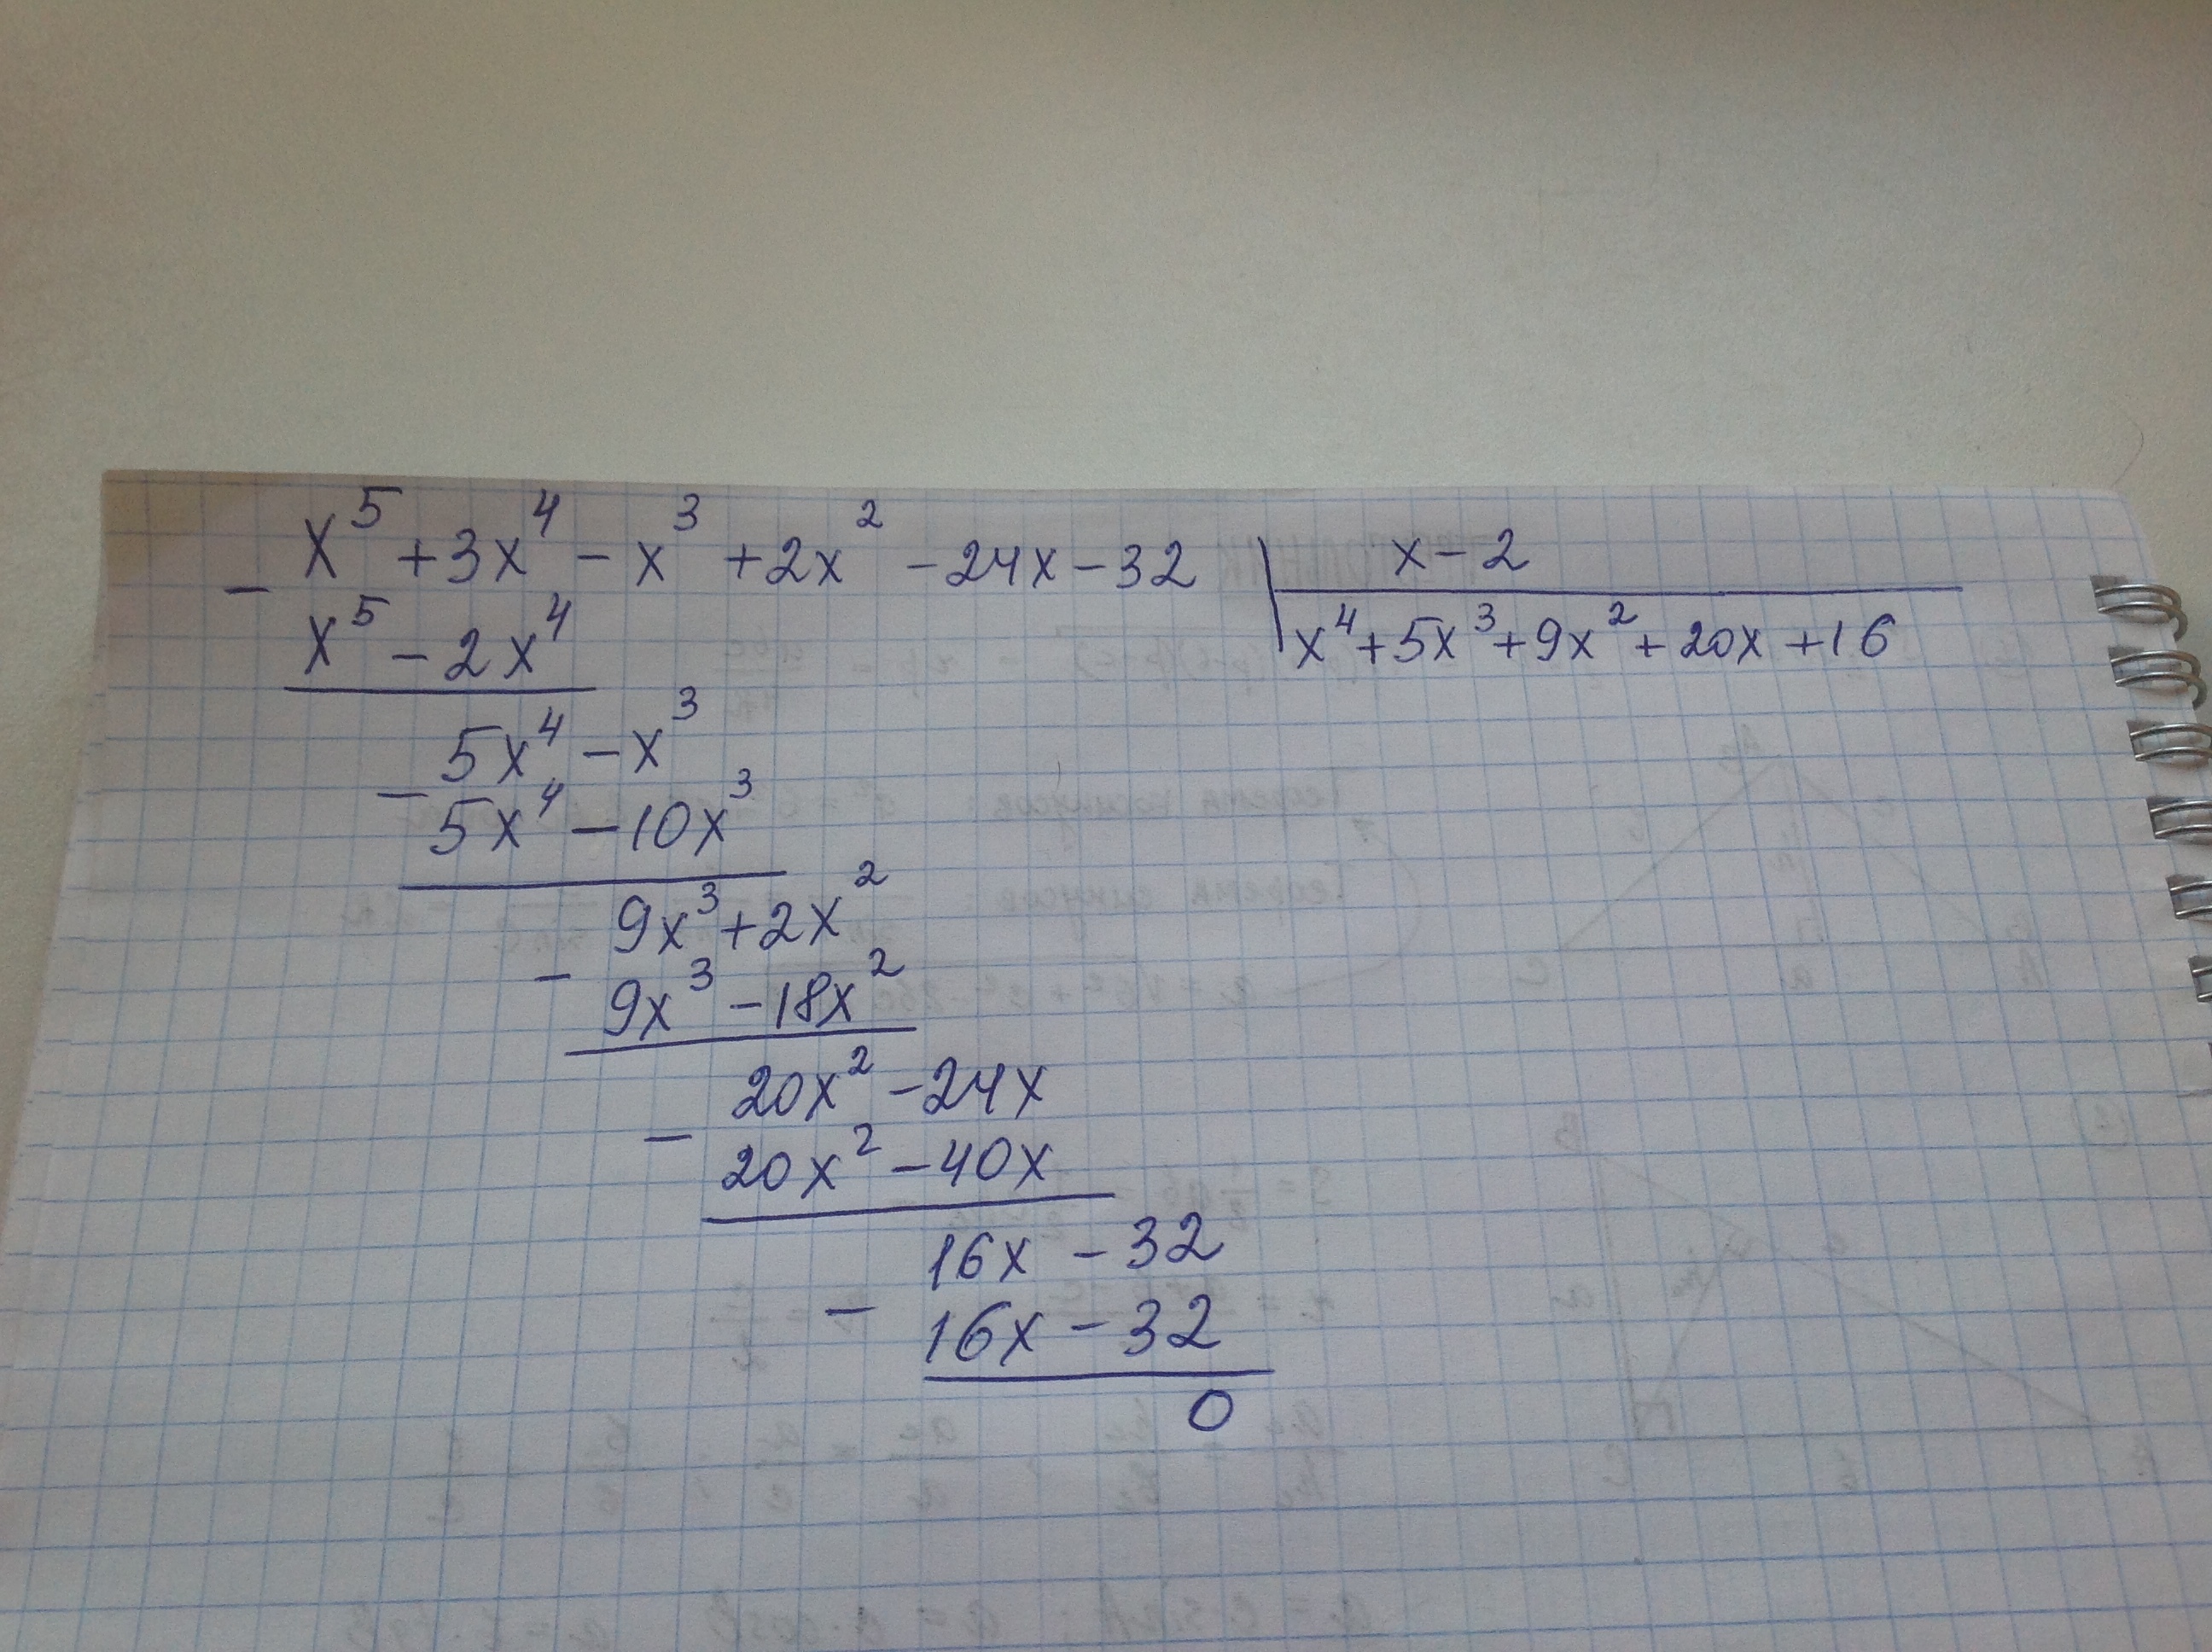 32 x 5 x 7. 4x2=32x. 11x^5+3x^4+8x^3+2x^2-1 поделить на x-i. 2x5-4x3-32 x-2 деление. 2x5-4x3-32 x-2.